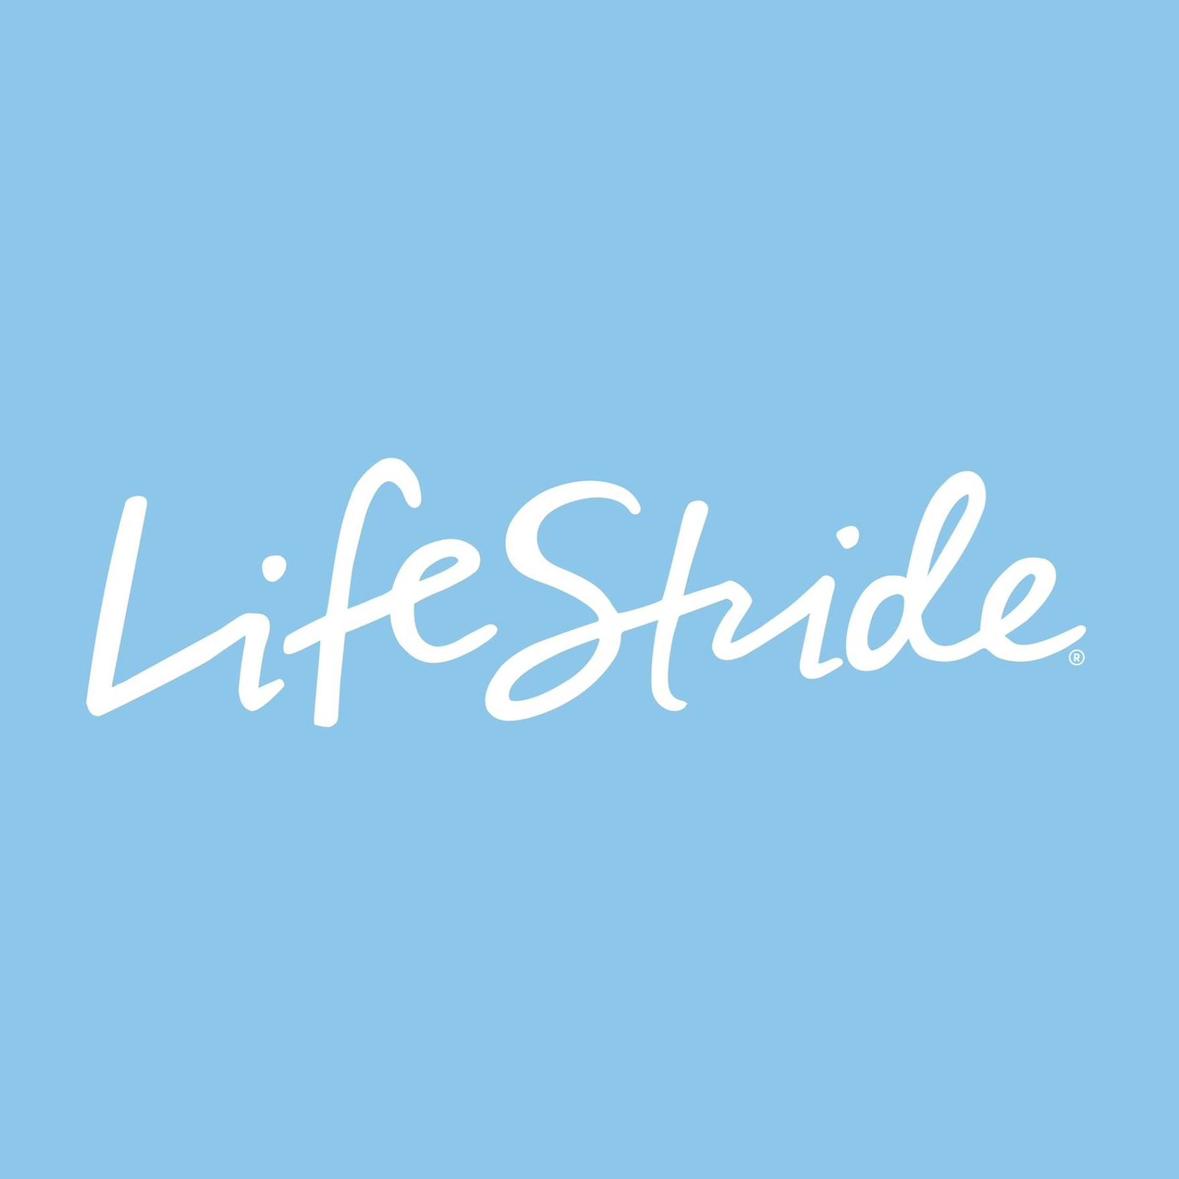 LifeStride's images